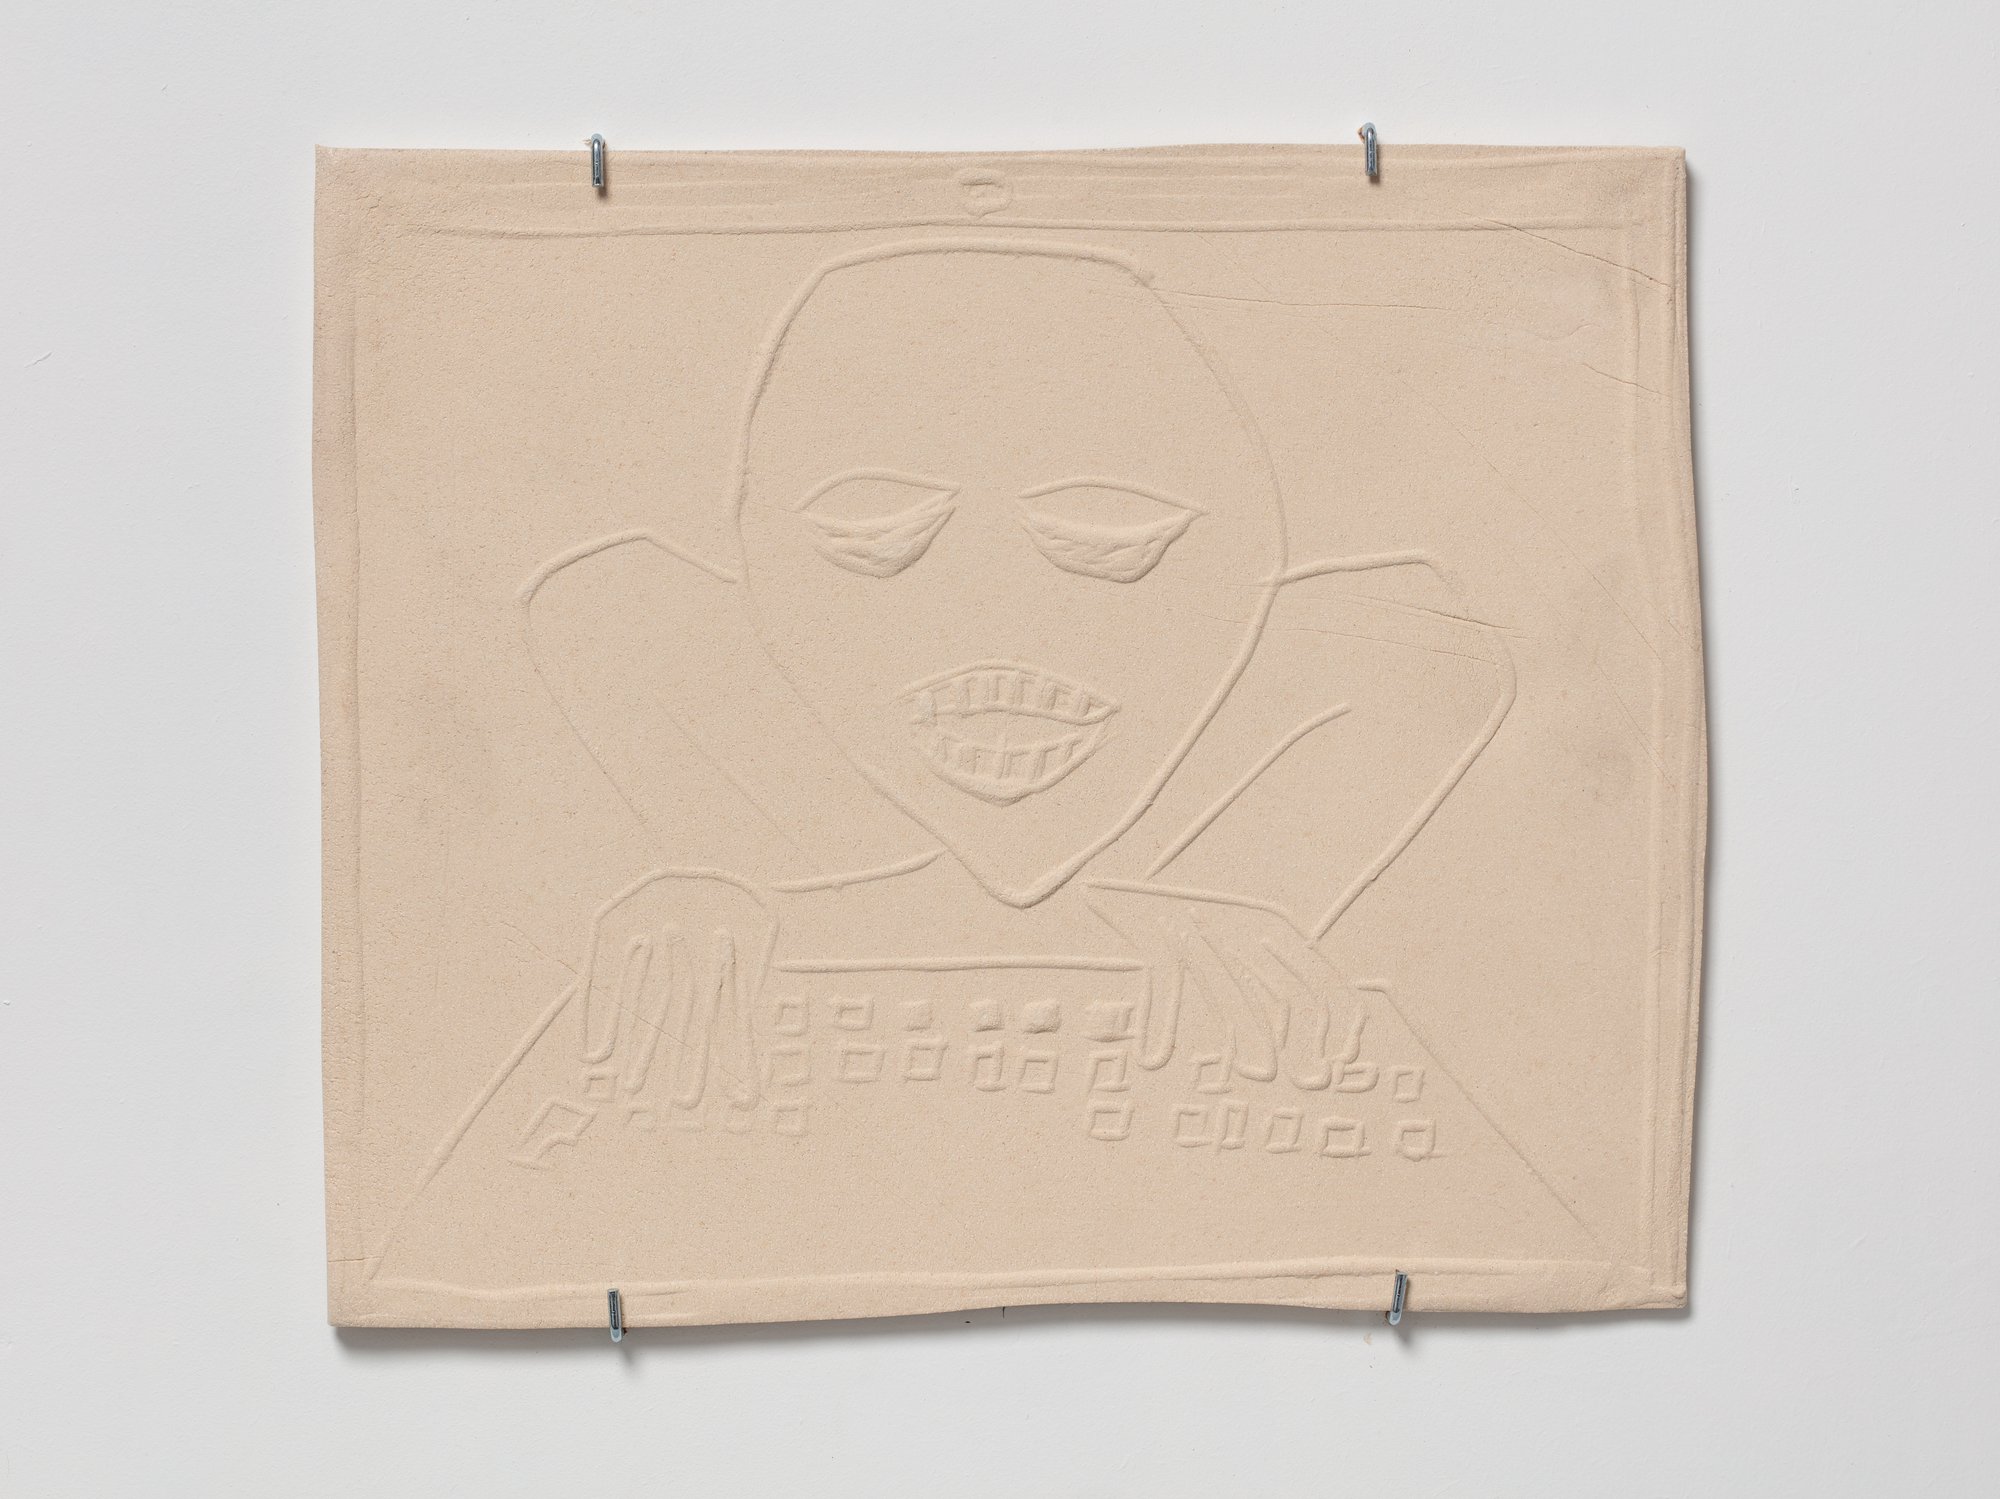 Sidsel Meineche Hansen, Laptop curator, imprint in clay, 47 x 40 cm (18 1/2 x 15 3/4 in), 2018